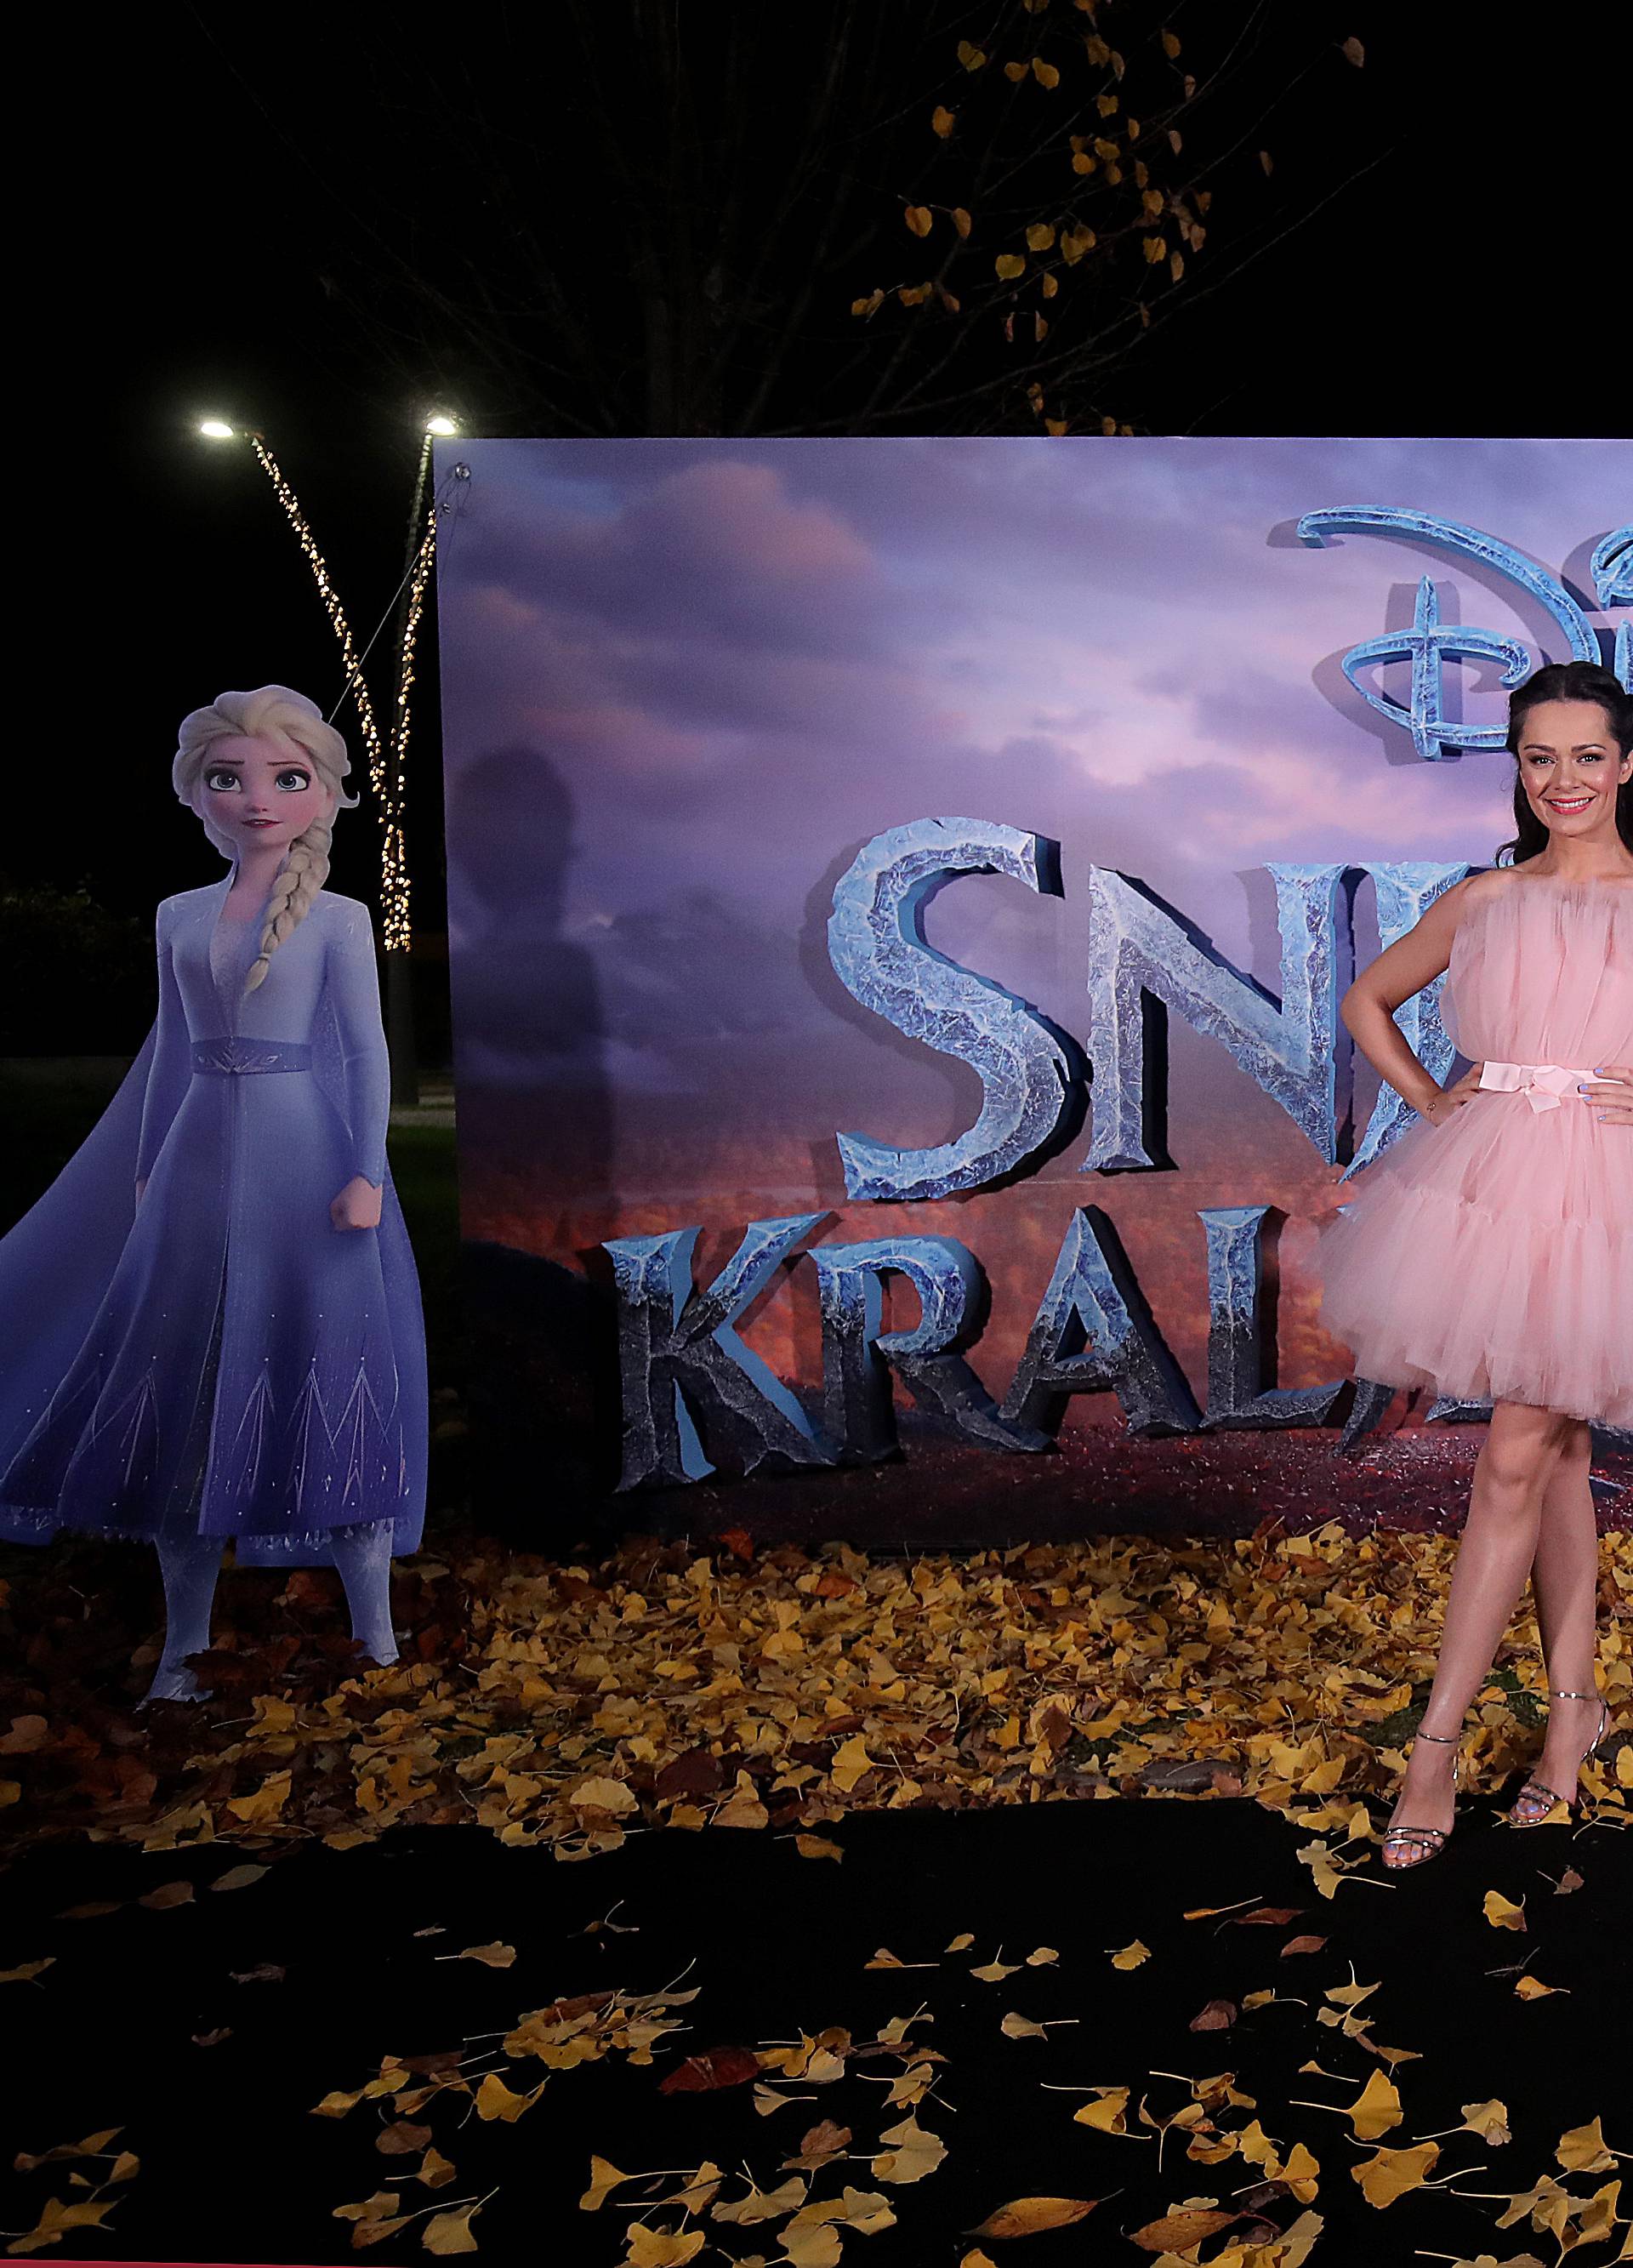 Zagreb: Premijera Disneyevog animiranog filma Snježno kraljevstvo 2